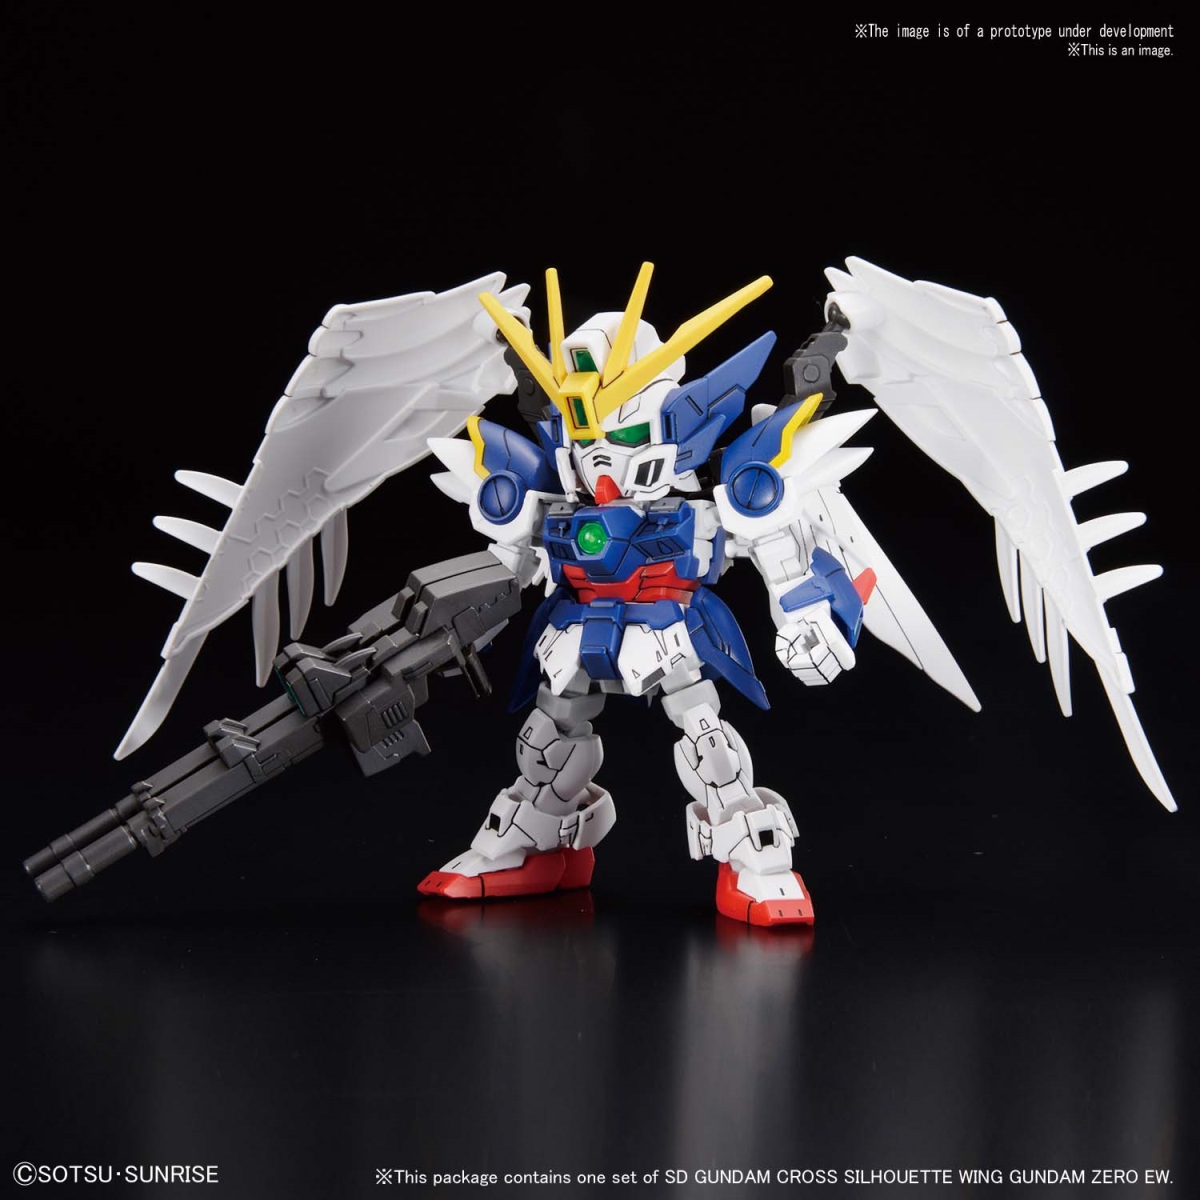 Bas5057841 No.13 Wing Gundam Zero Ew Spirits Sdcs Model Kit From Gundam Wing - Endless Waltz